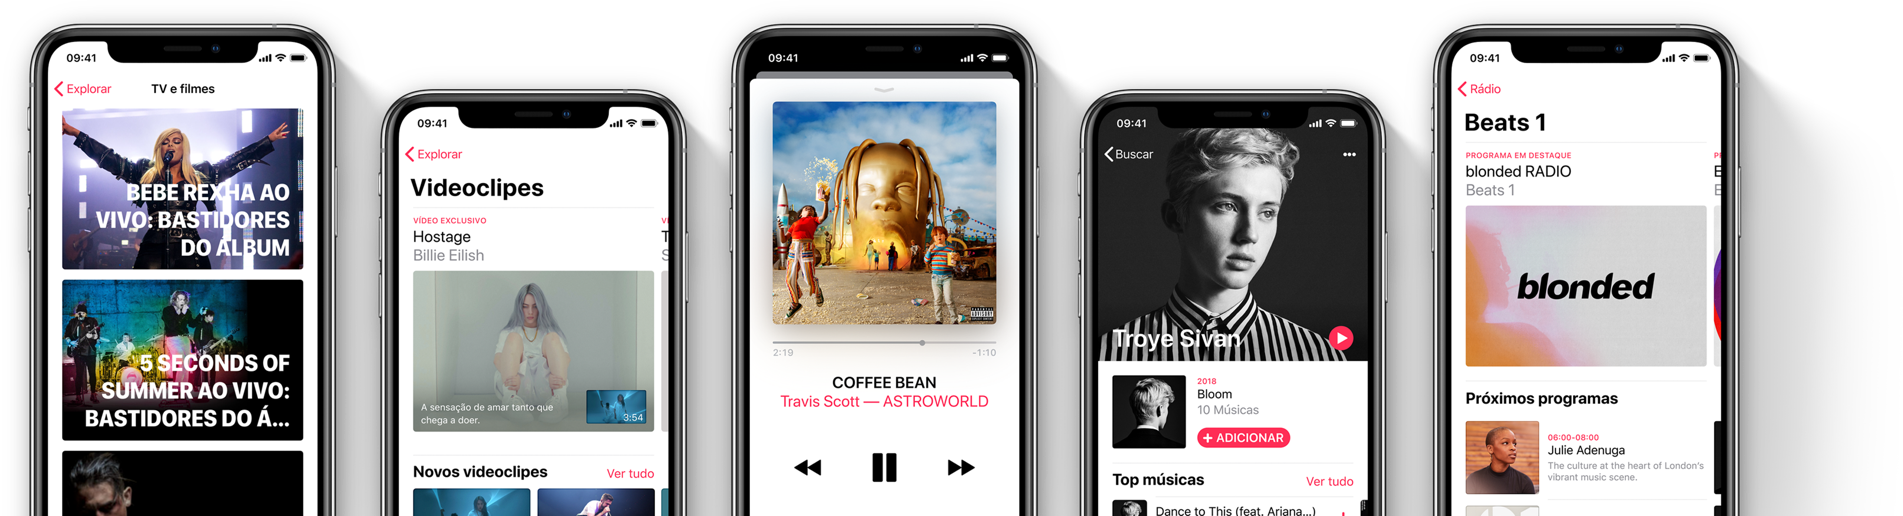 Soaring: Apple Music Already Has 60 Million Users, Says Eddy Cue